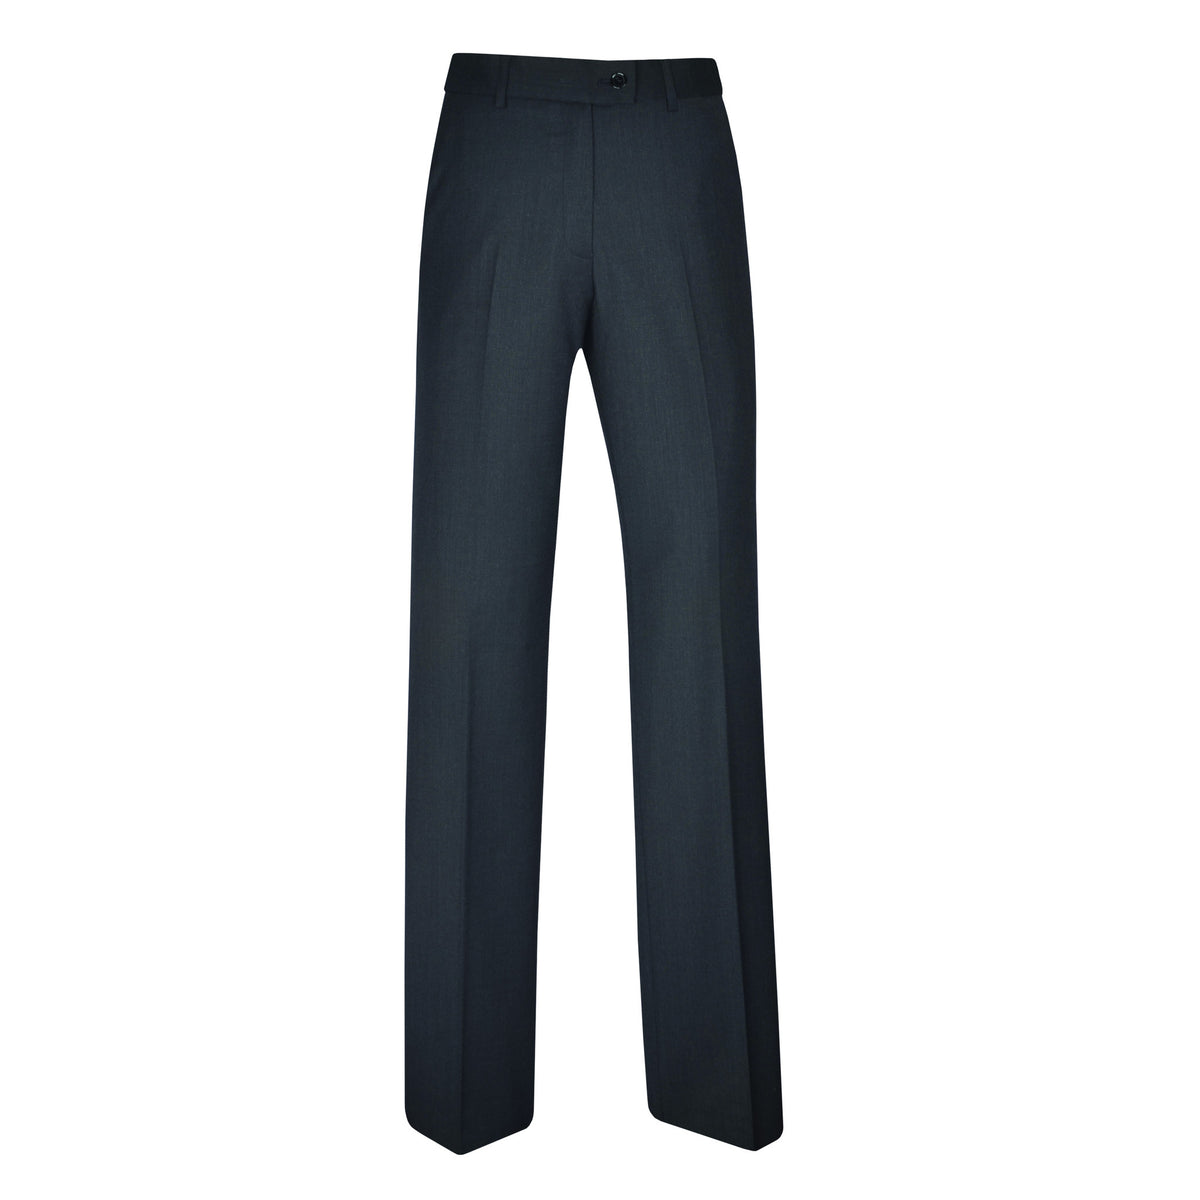 Ladies Suit Trousers - Black Label - peterdrew.com
 - 1